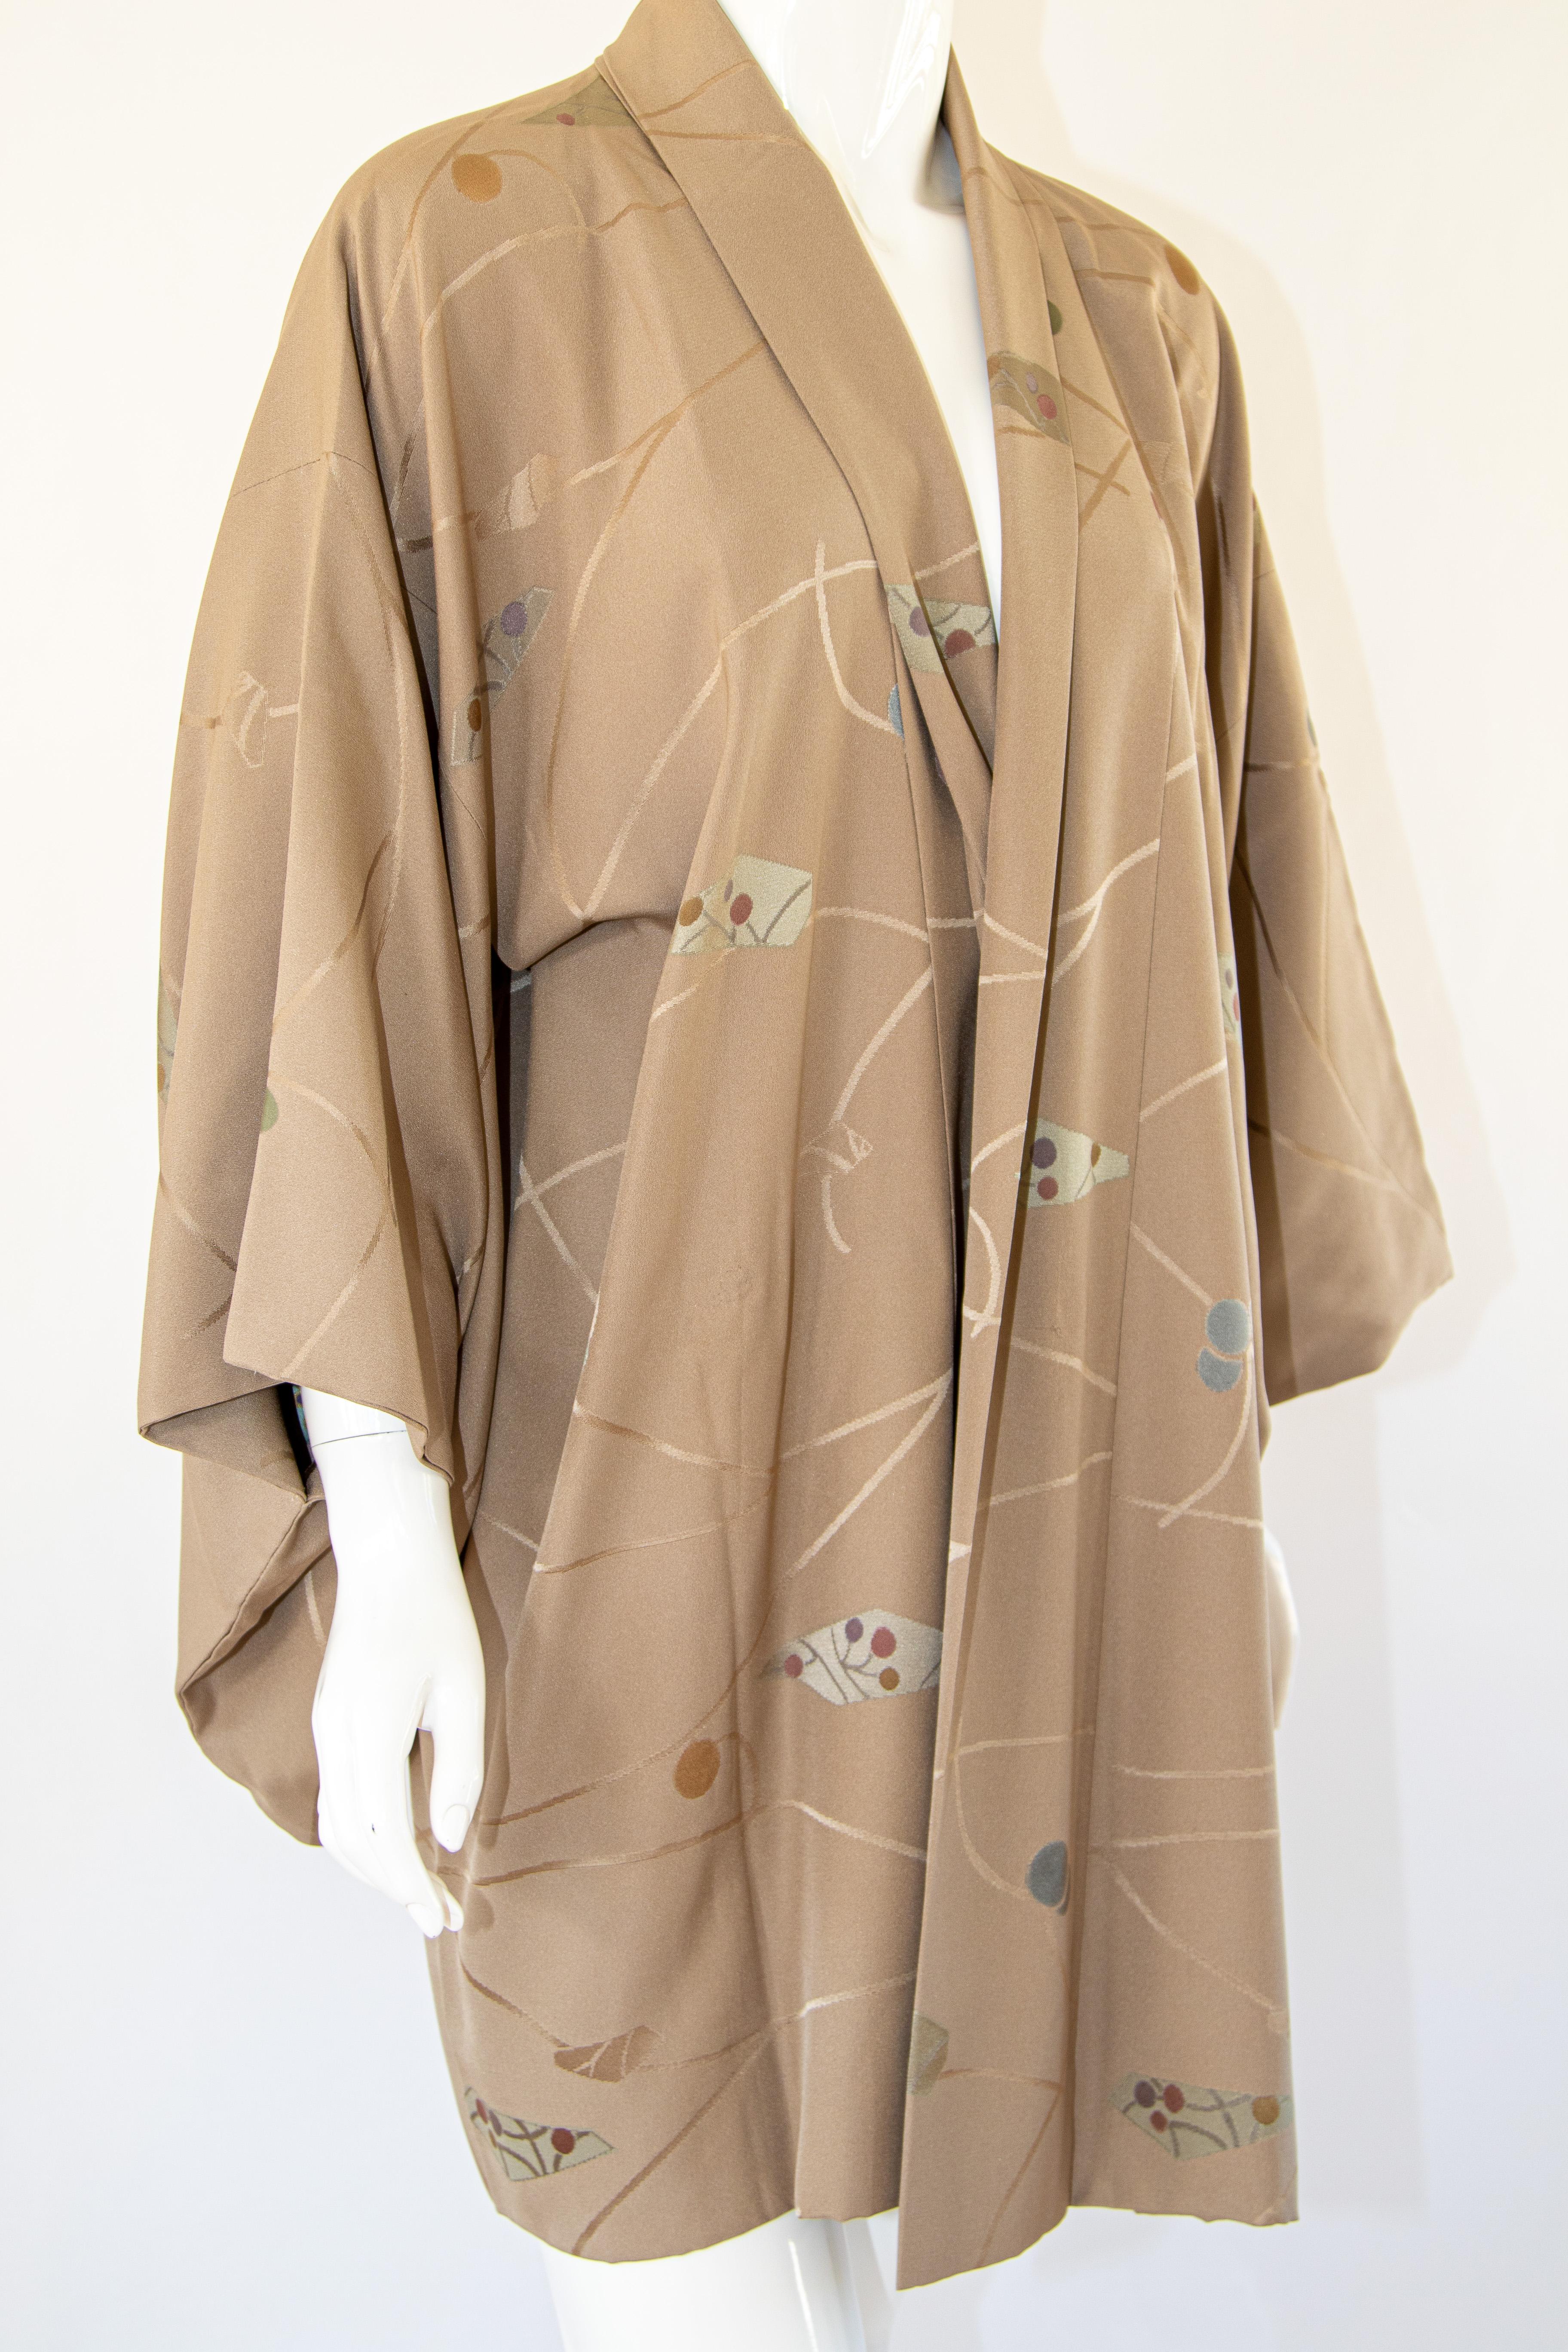 Short Vintage Japanese Kimono Silk Shibori Reversible Jacket 6